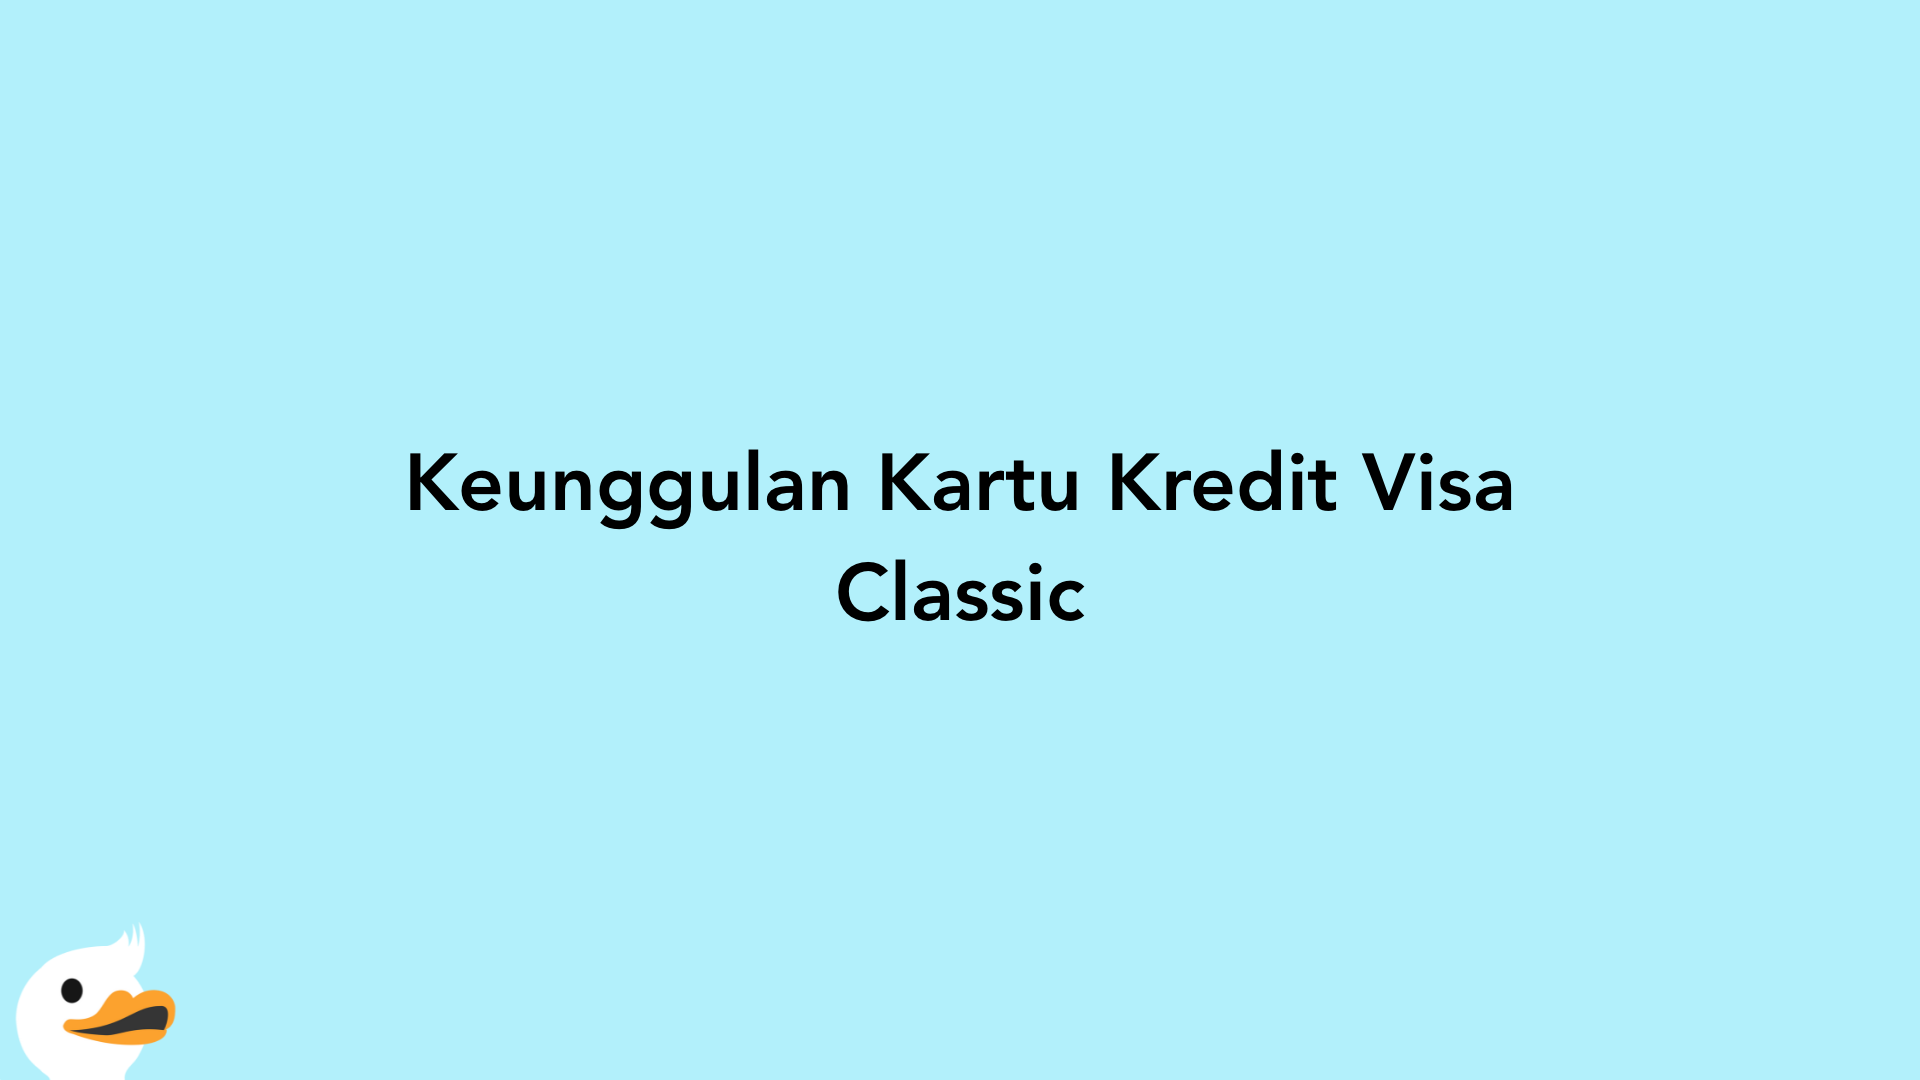 Keunggulan Kartu Kredit Visa Classic